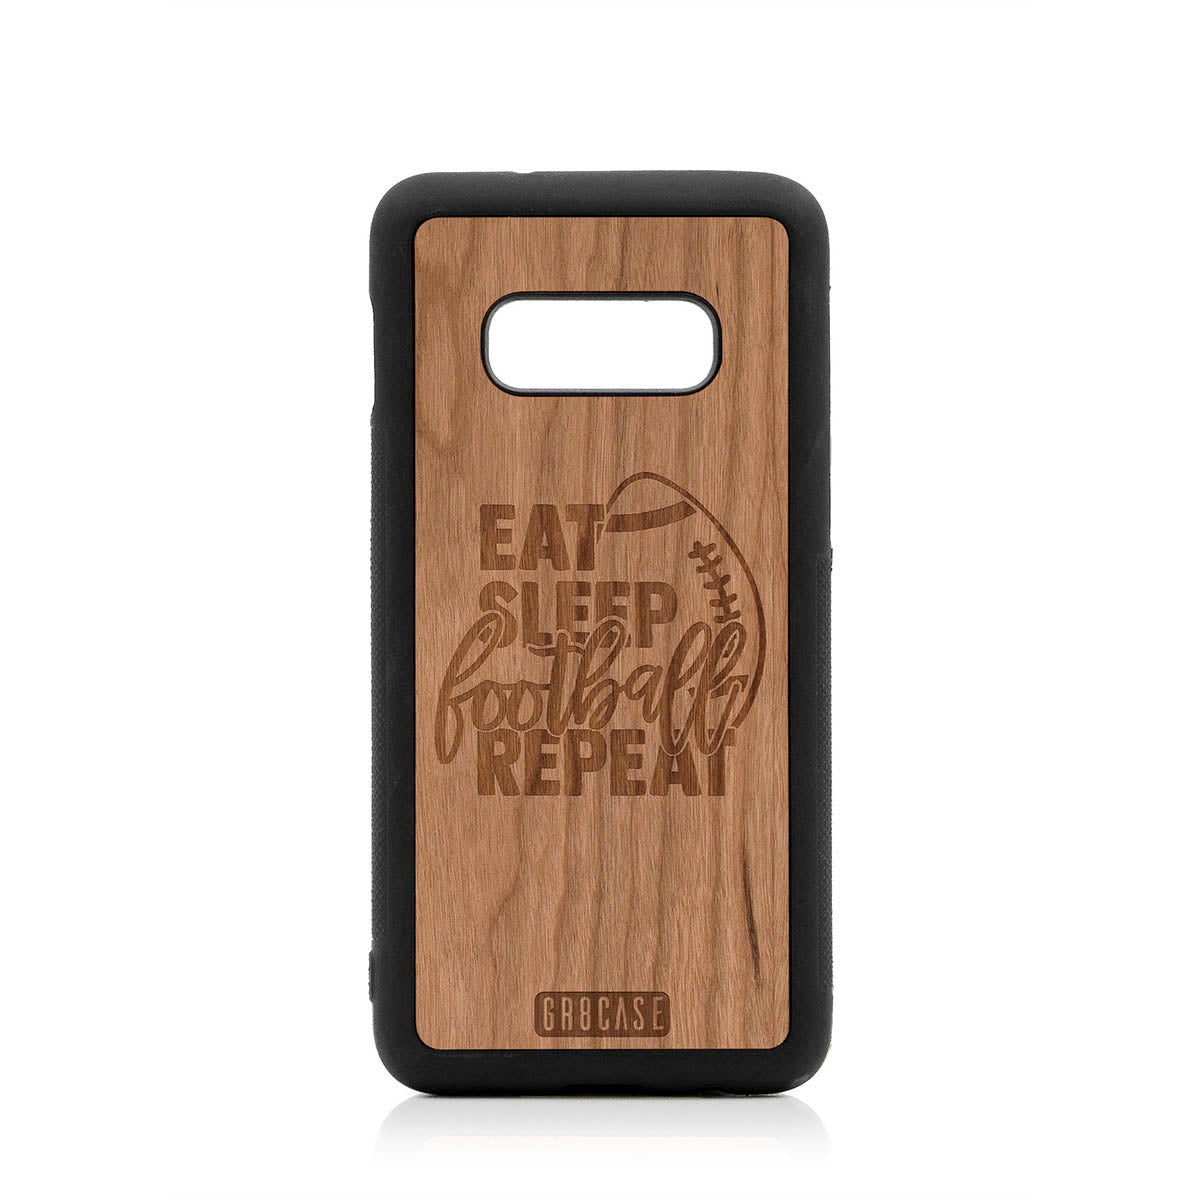 Eat Sleep Football Repeat Design Wood Case For Samsung Galaxy S10E